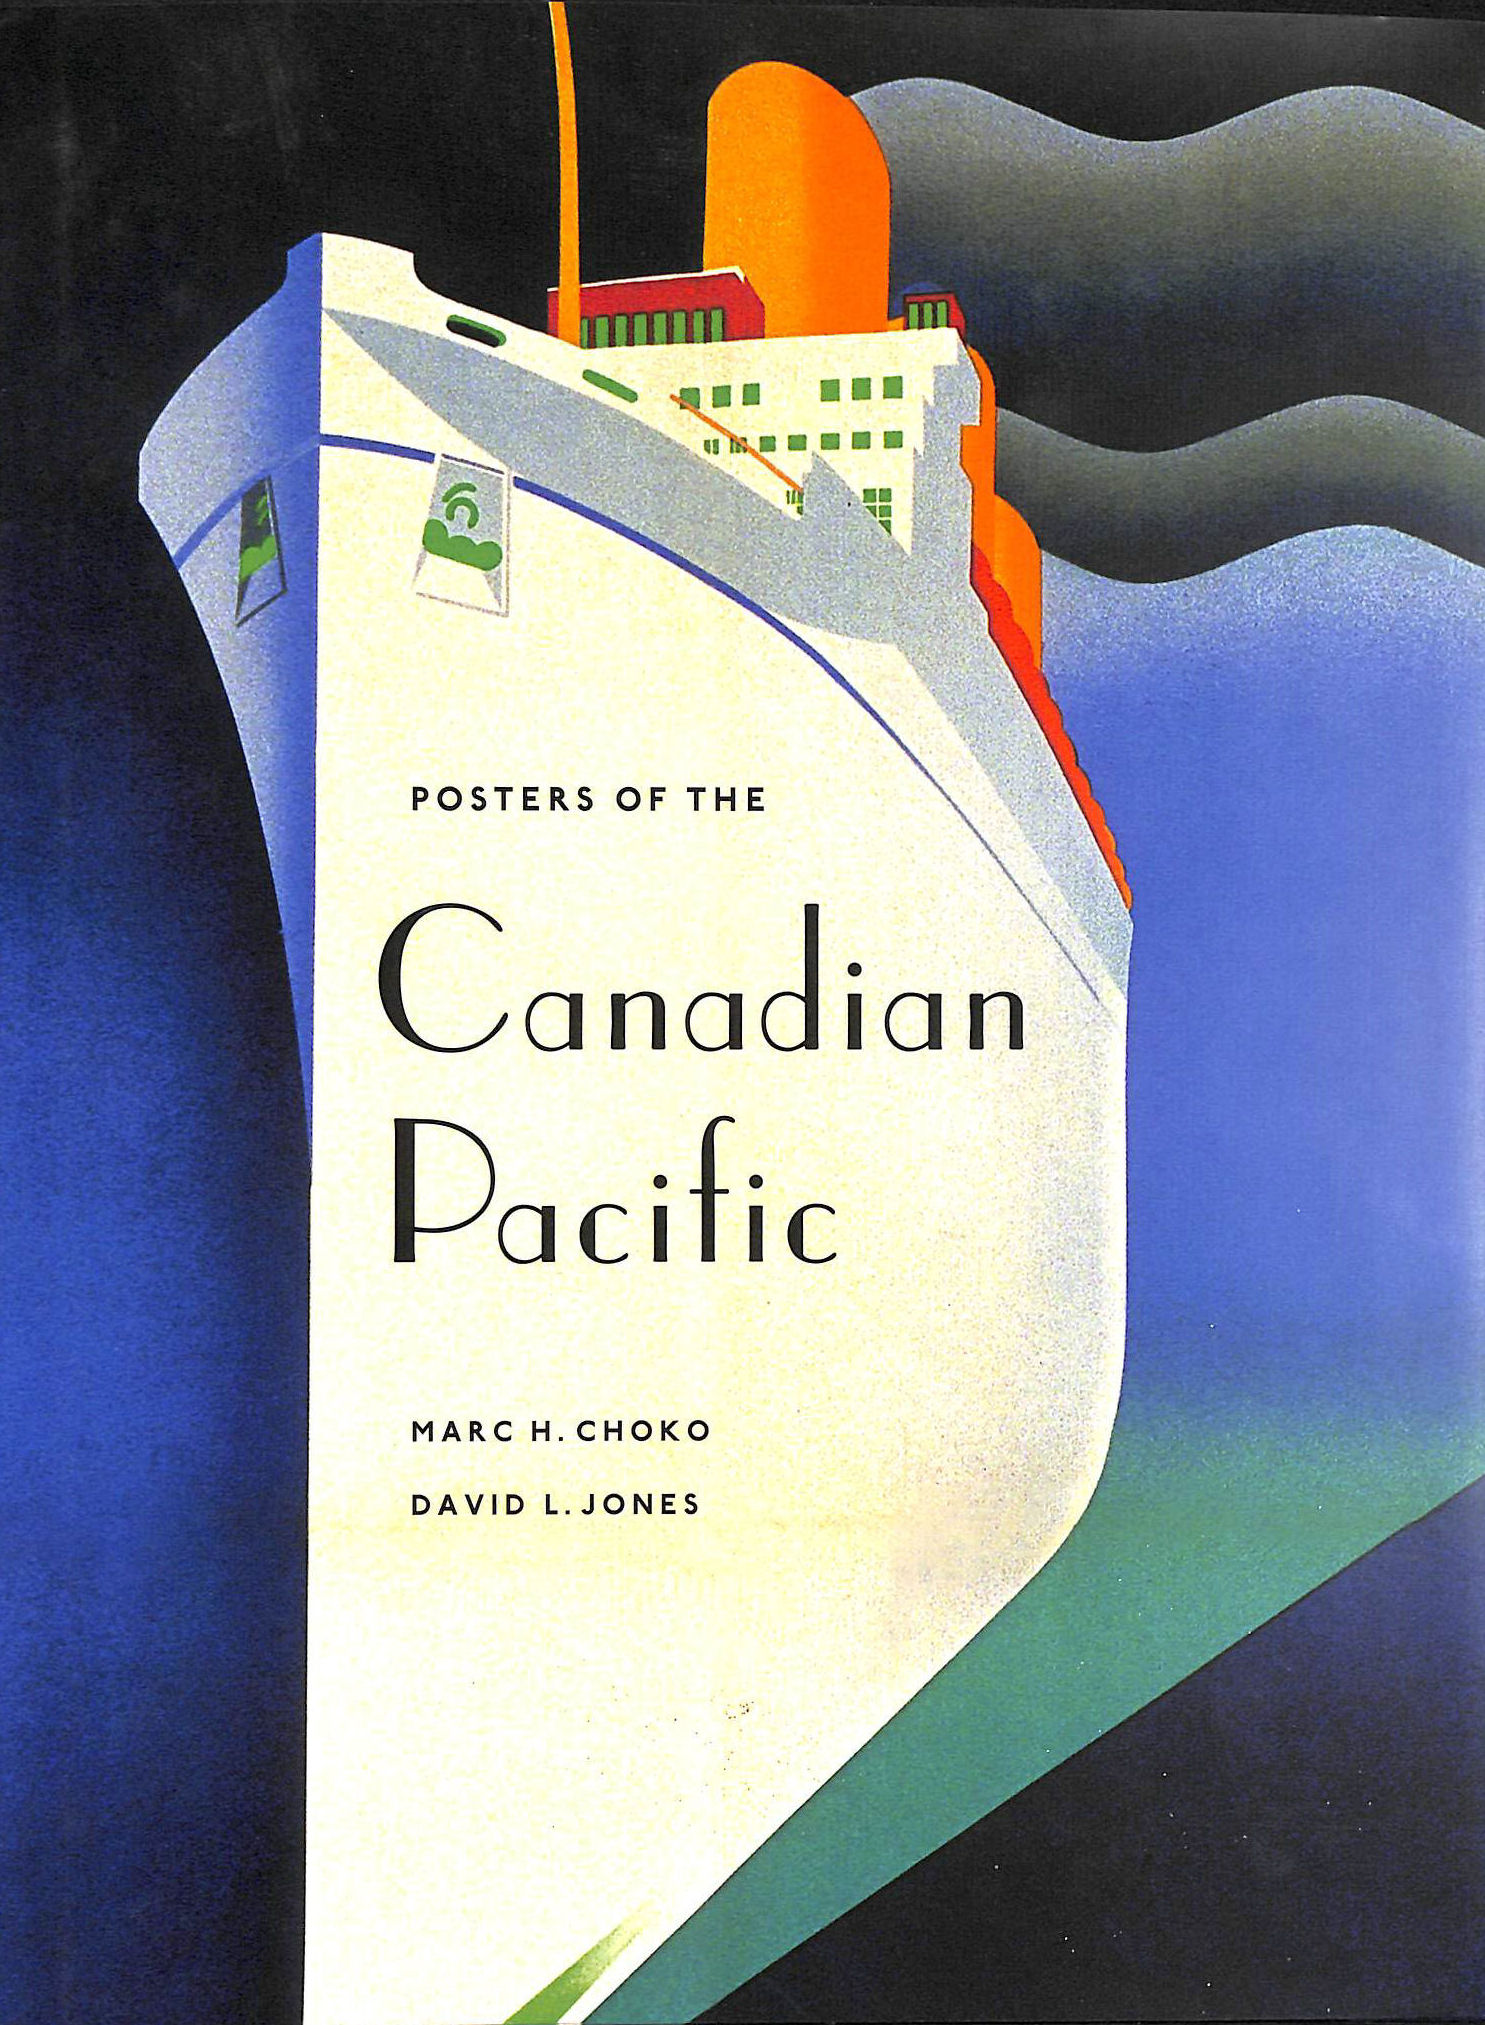 CHOKO, MARC H.; JONES, DAVID L. - Posters of the Canadian Pacific